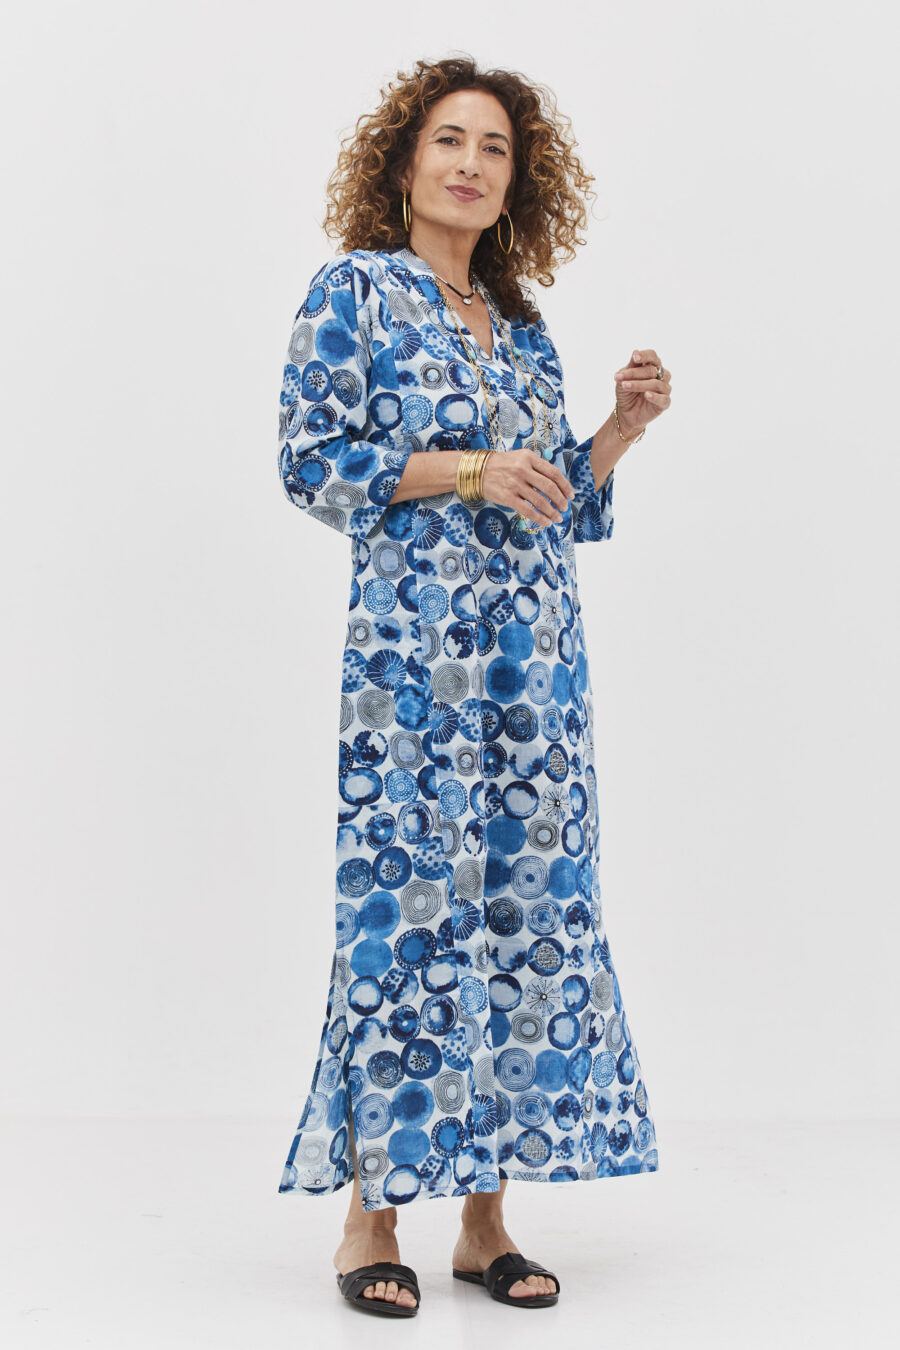 Jalabiya dress | Uniquely designed dress – Ocean print, white dress with blue sphere print.